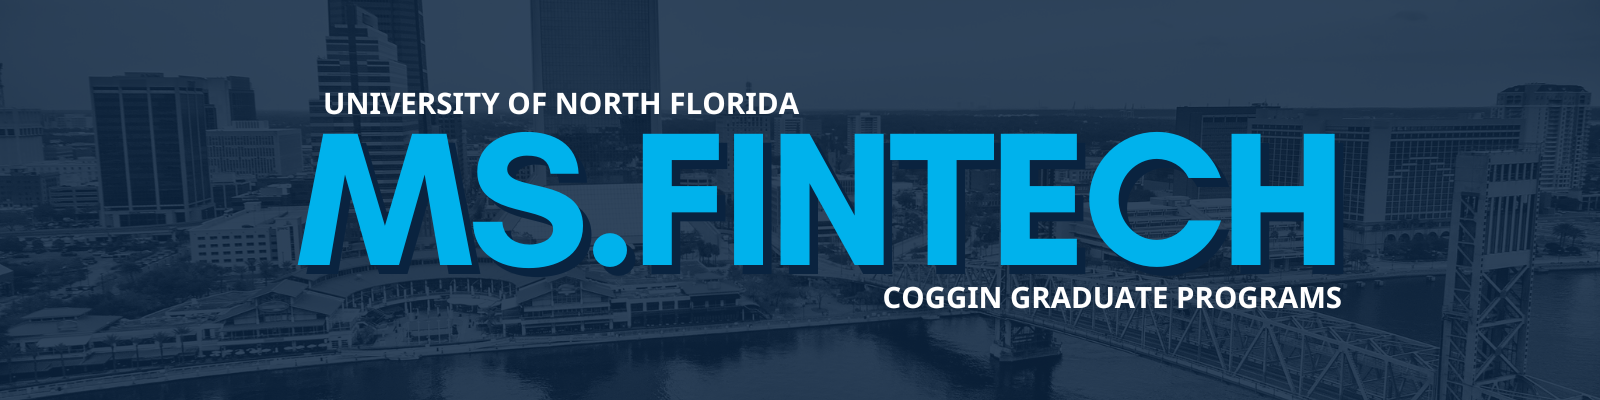 University of North Florida, MS. FinTech, Coggin Graduate Programs